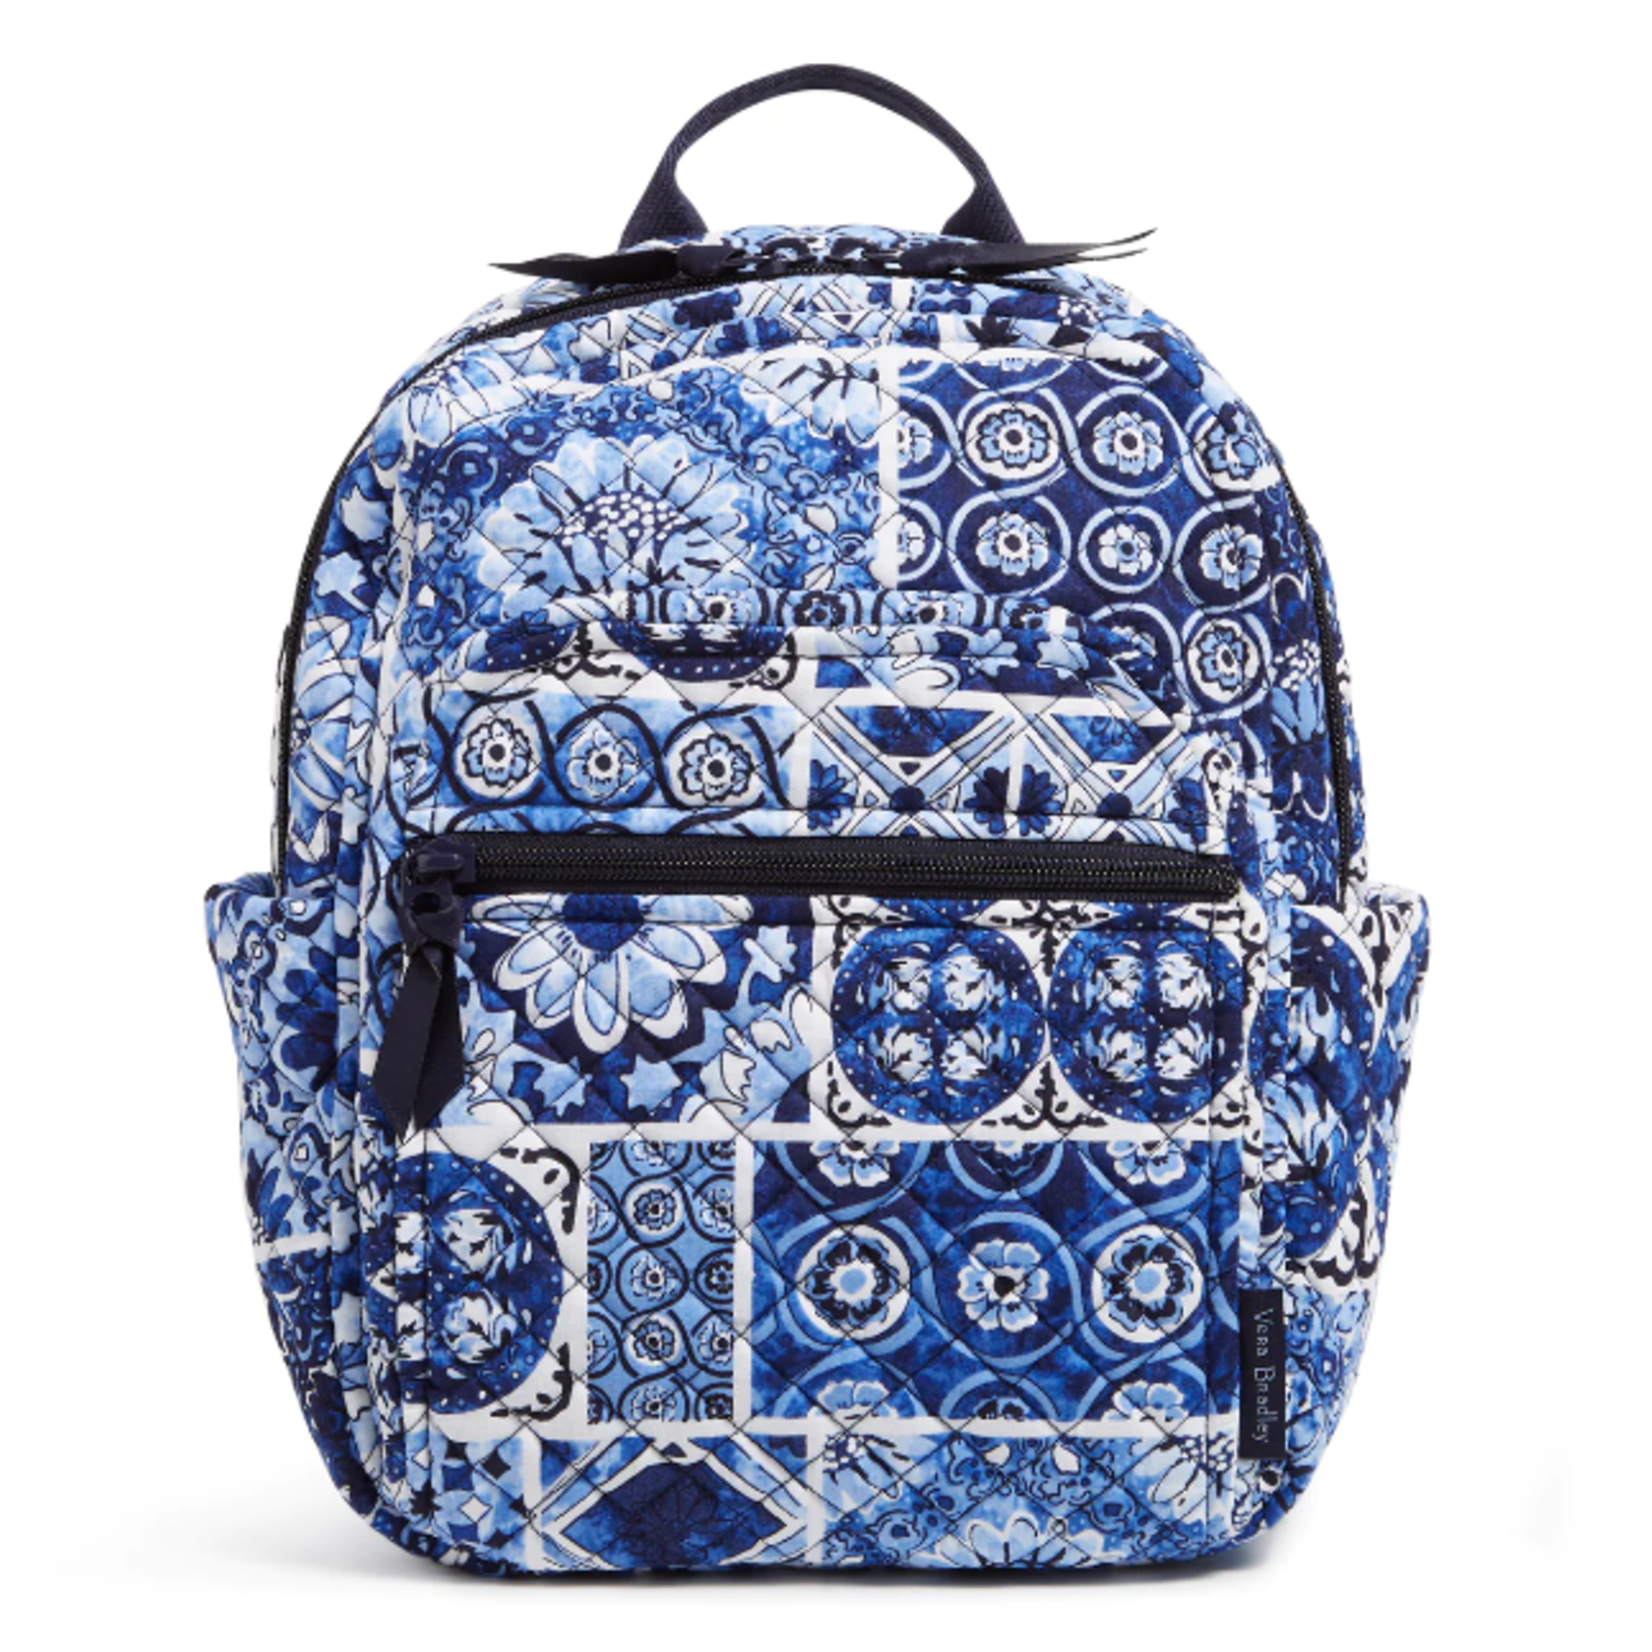 Vera Bradley Vera Bradley Small Backpack Island Tile Blue